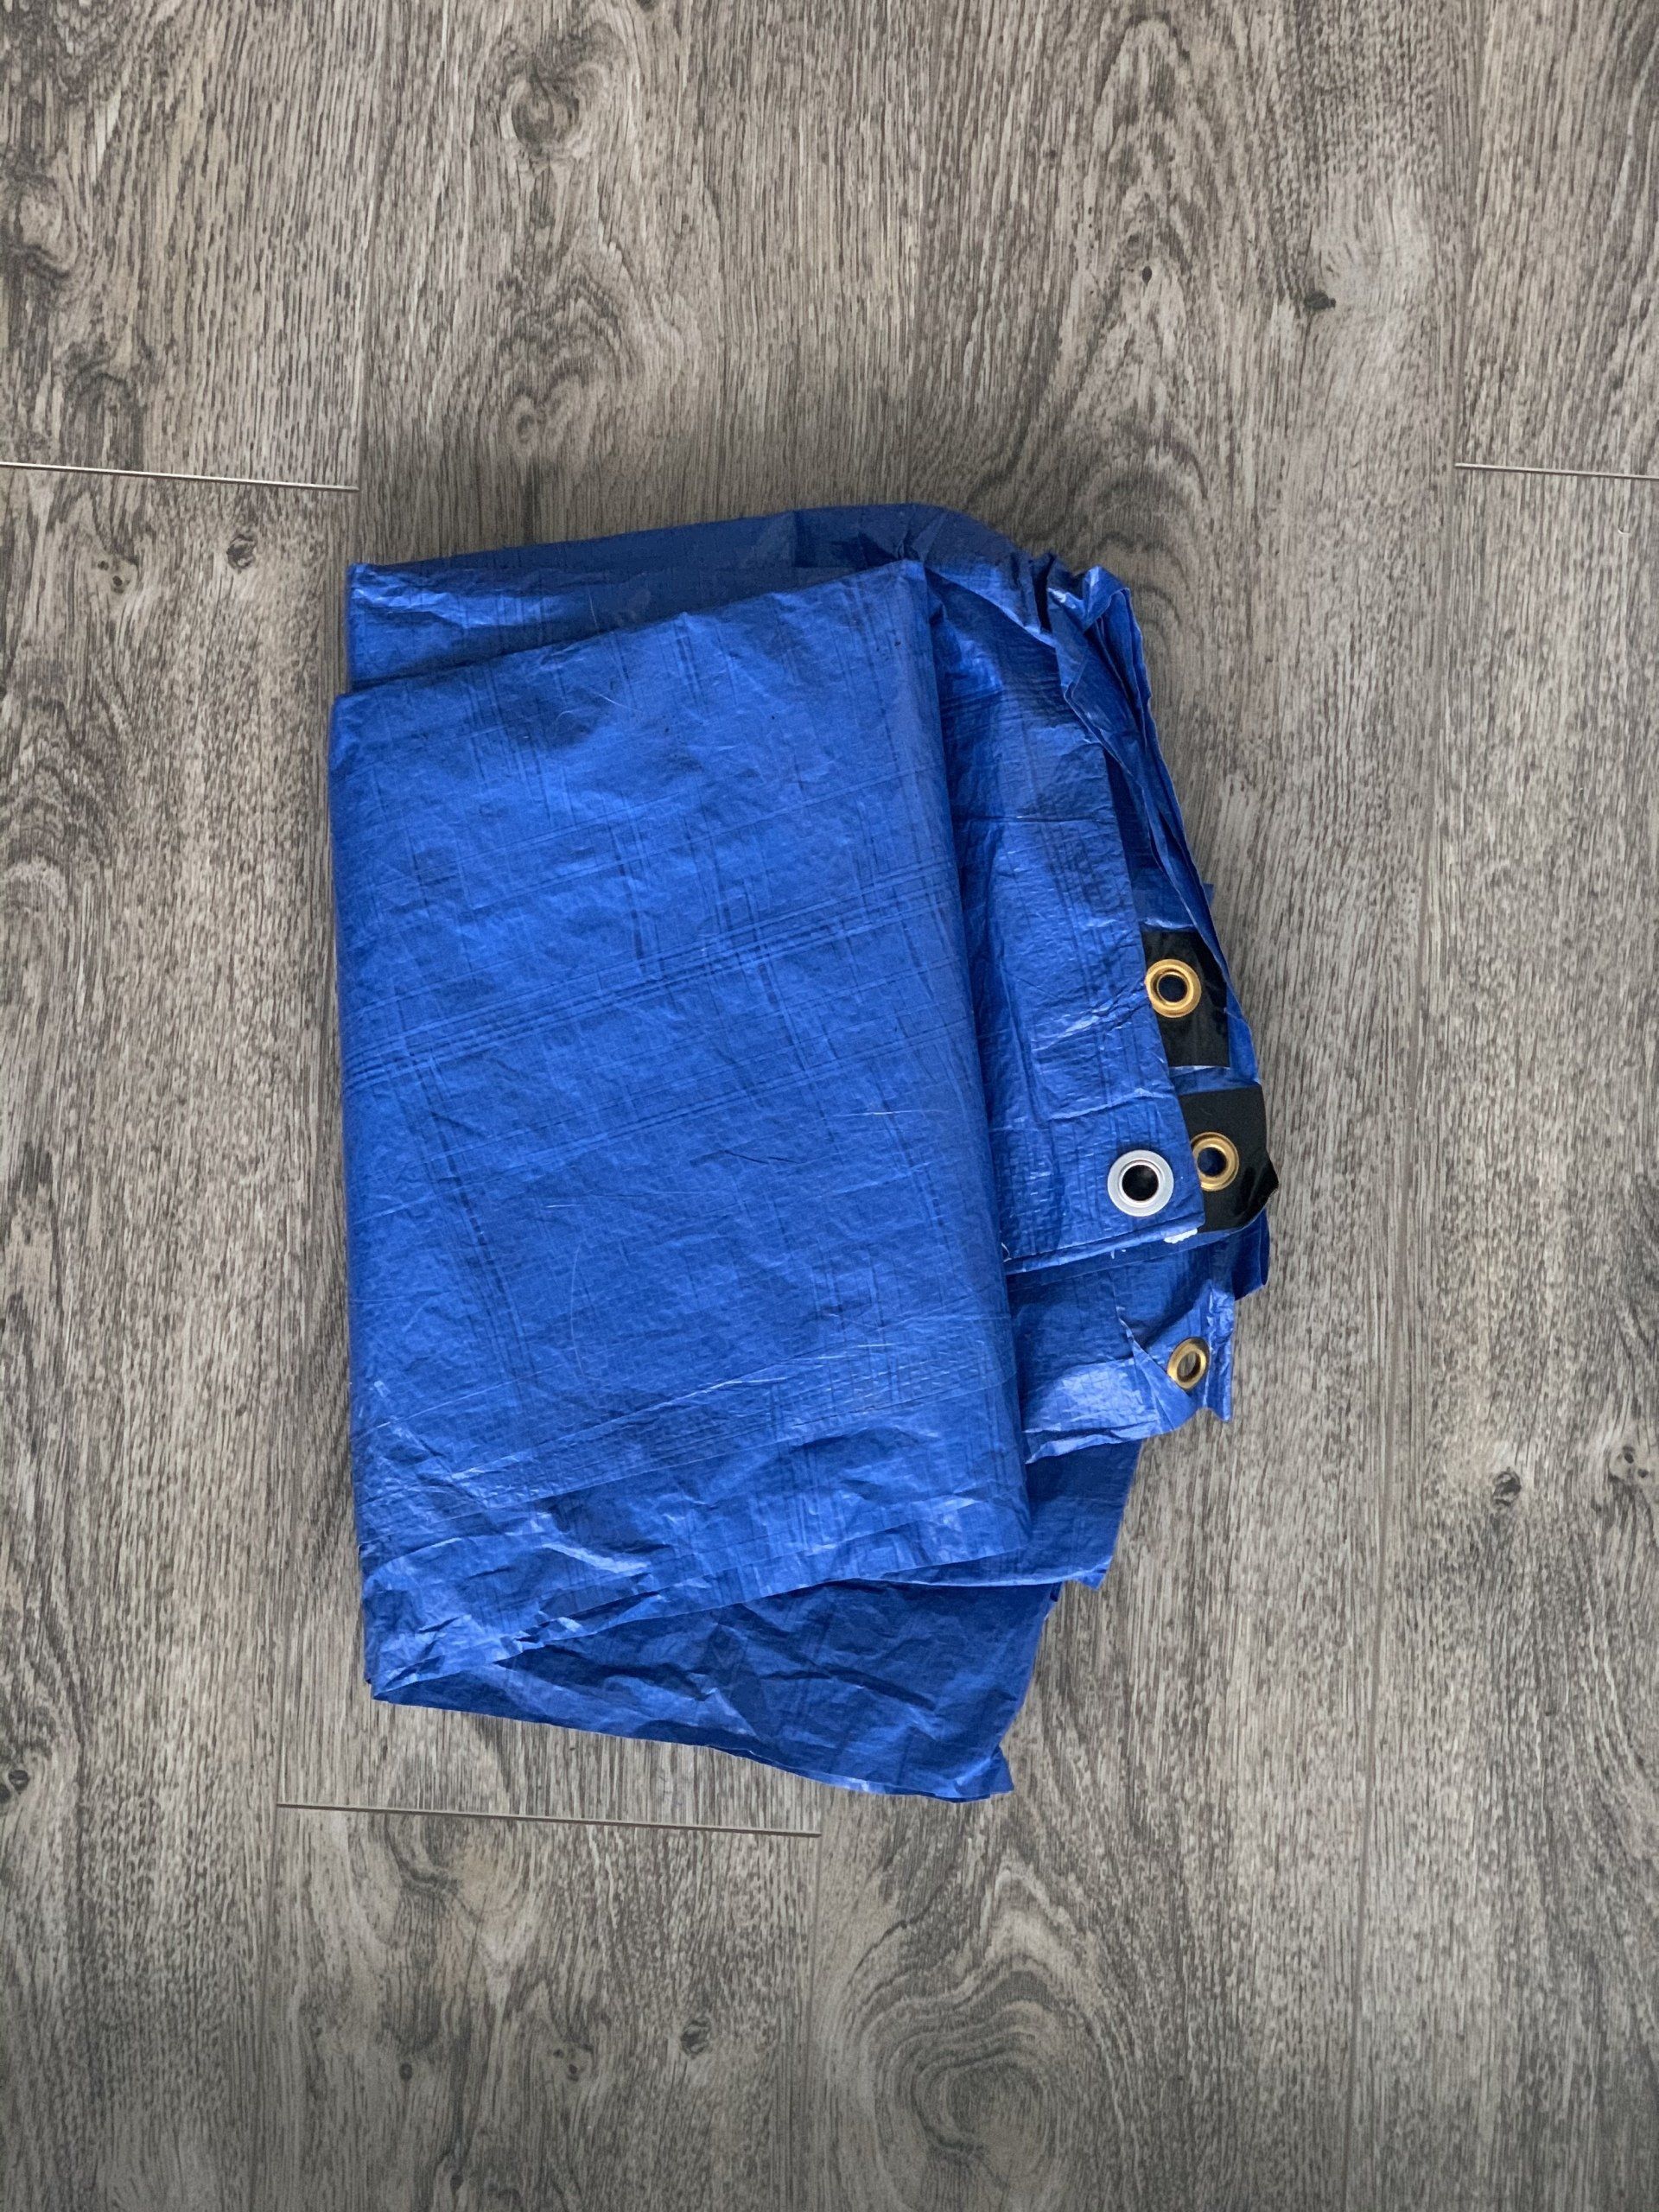 Blue Light suty tarp from Home Depot